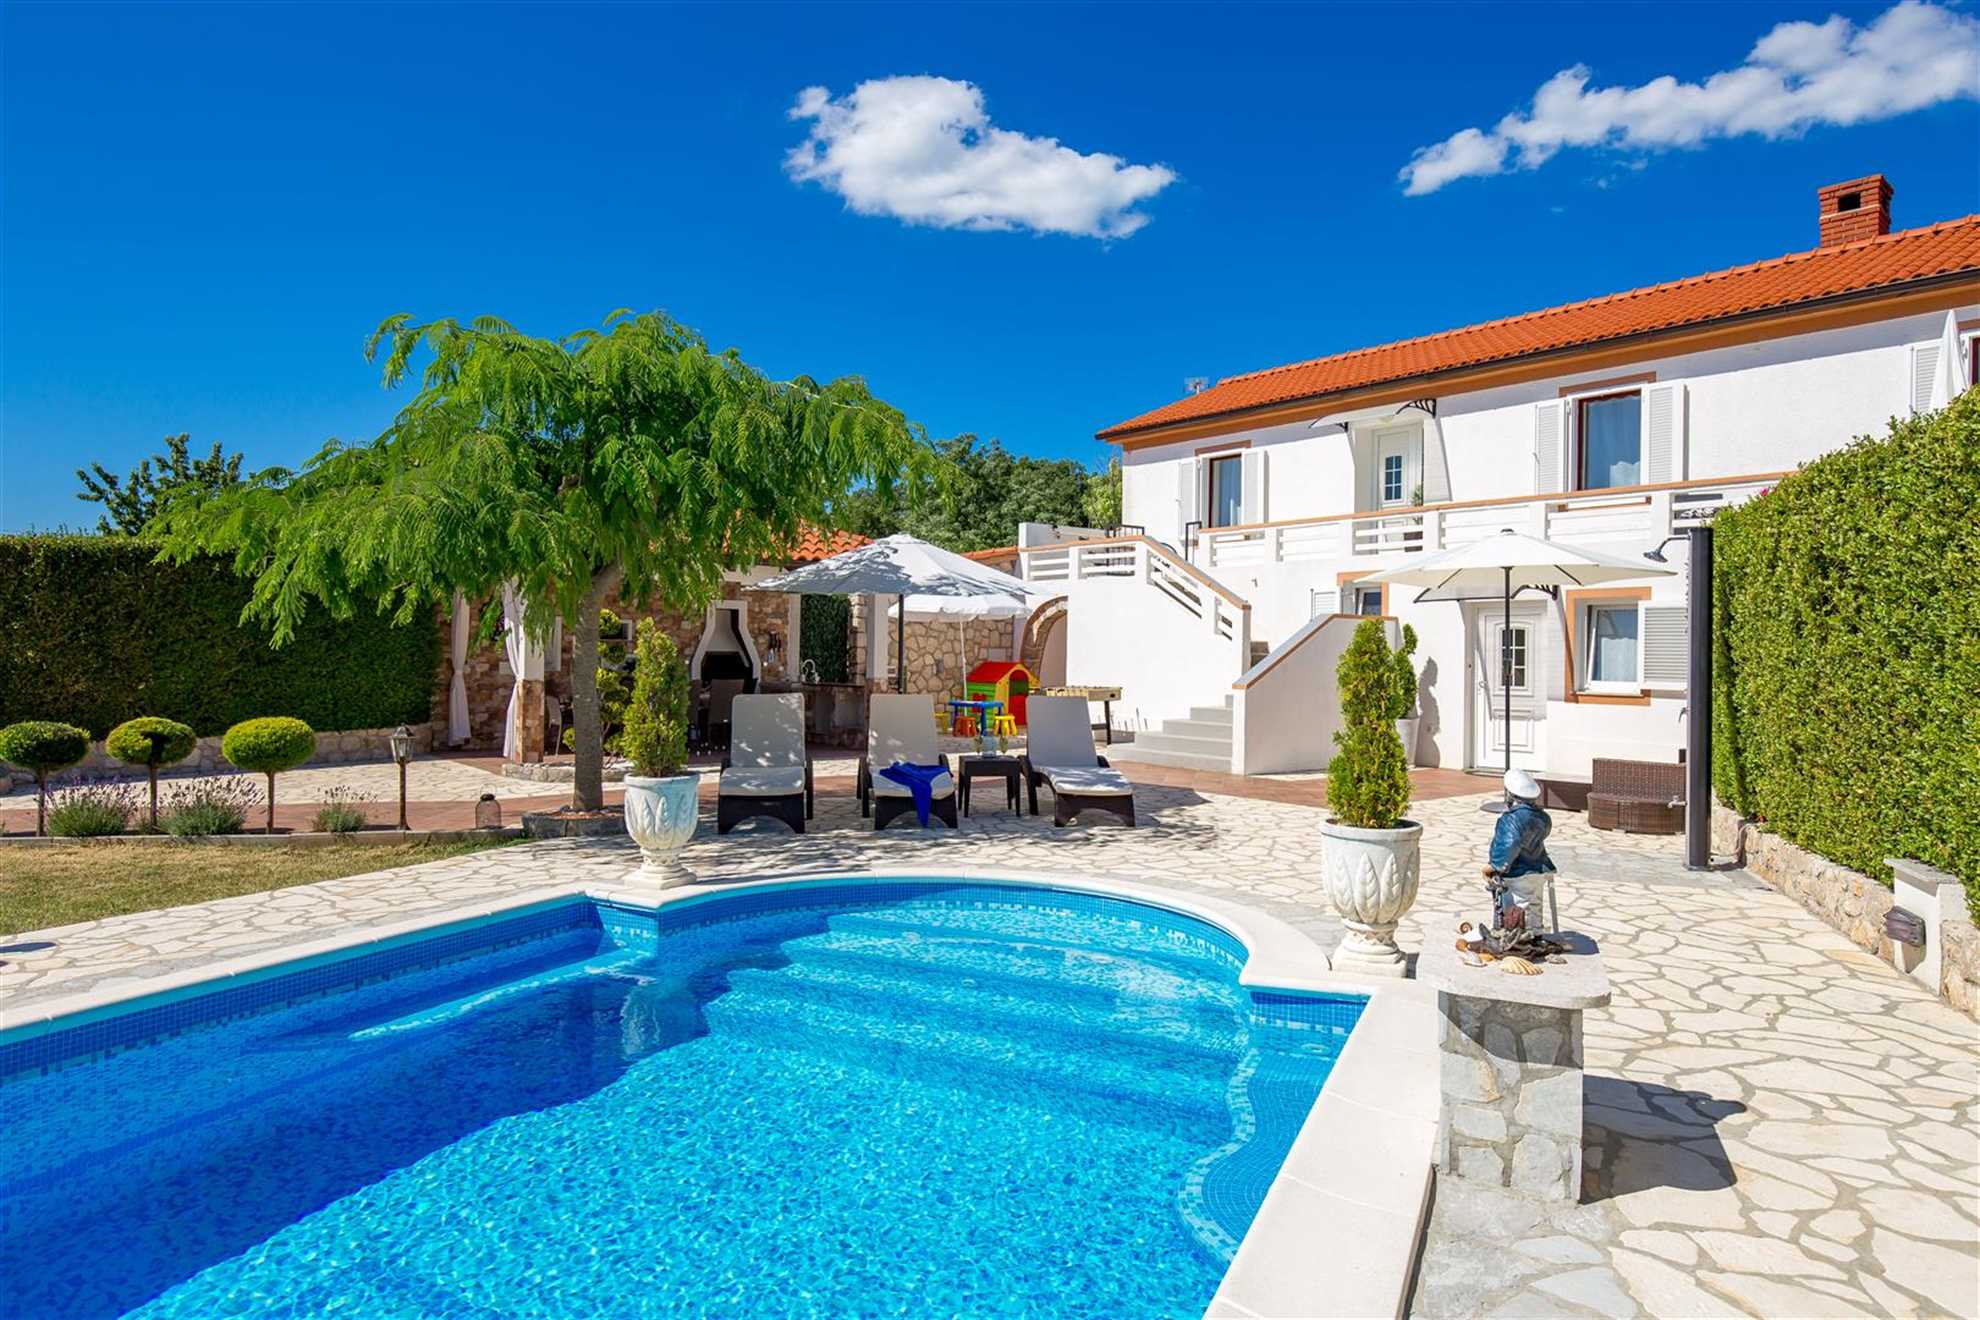 Villa Seastar with a private swimming pool